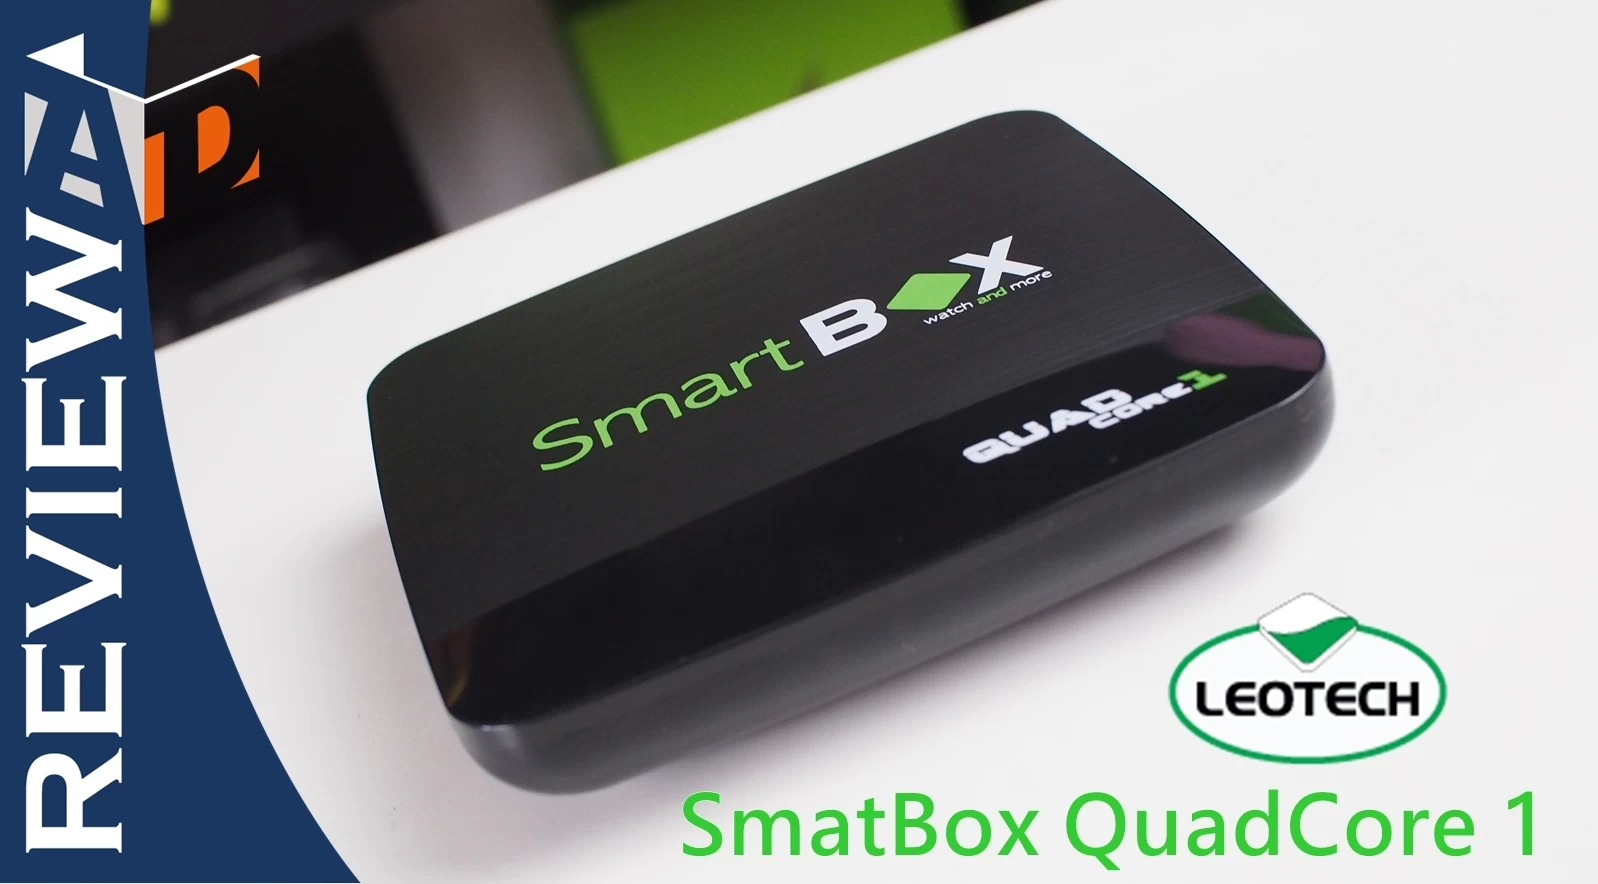 review Leotech SmartBox Quadcore 1 | กล่องดูหนัง | รีวิว SmartBox Quadcore1 กล่องแอนดรอยด์ทีวีแบรนด์ไทย มาใหม่ในซีพียูที่แรงขึ้น